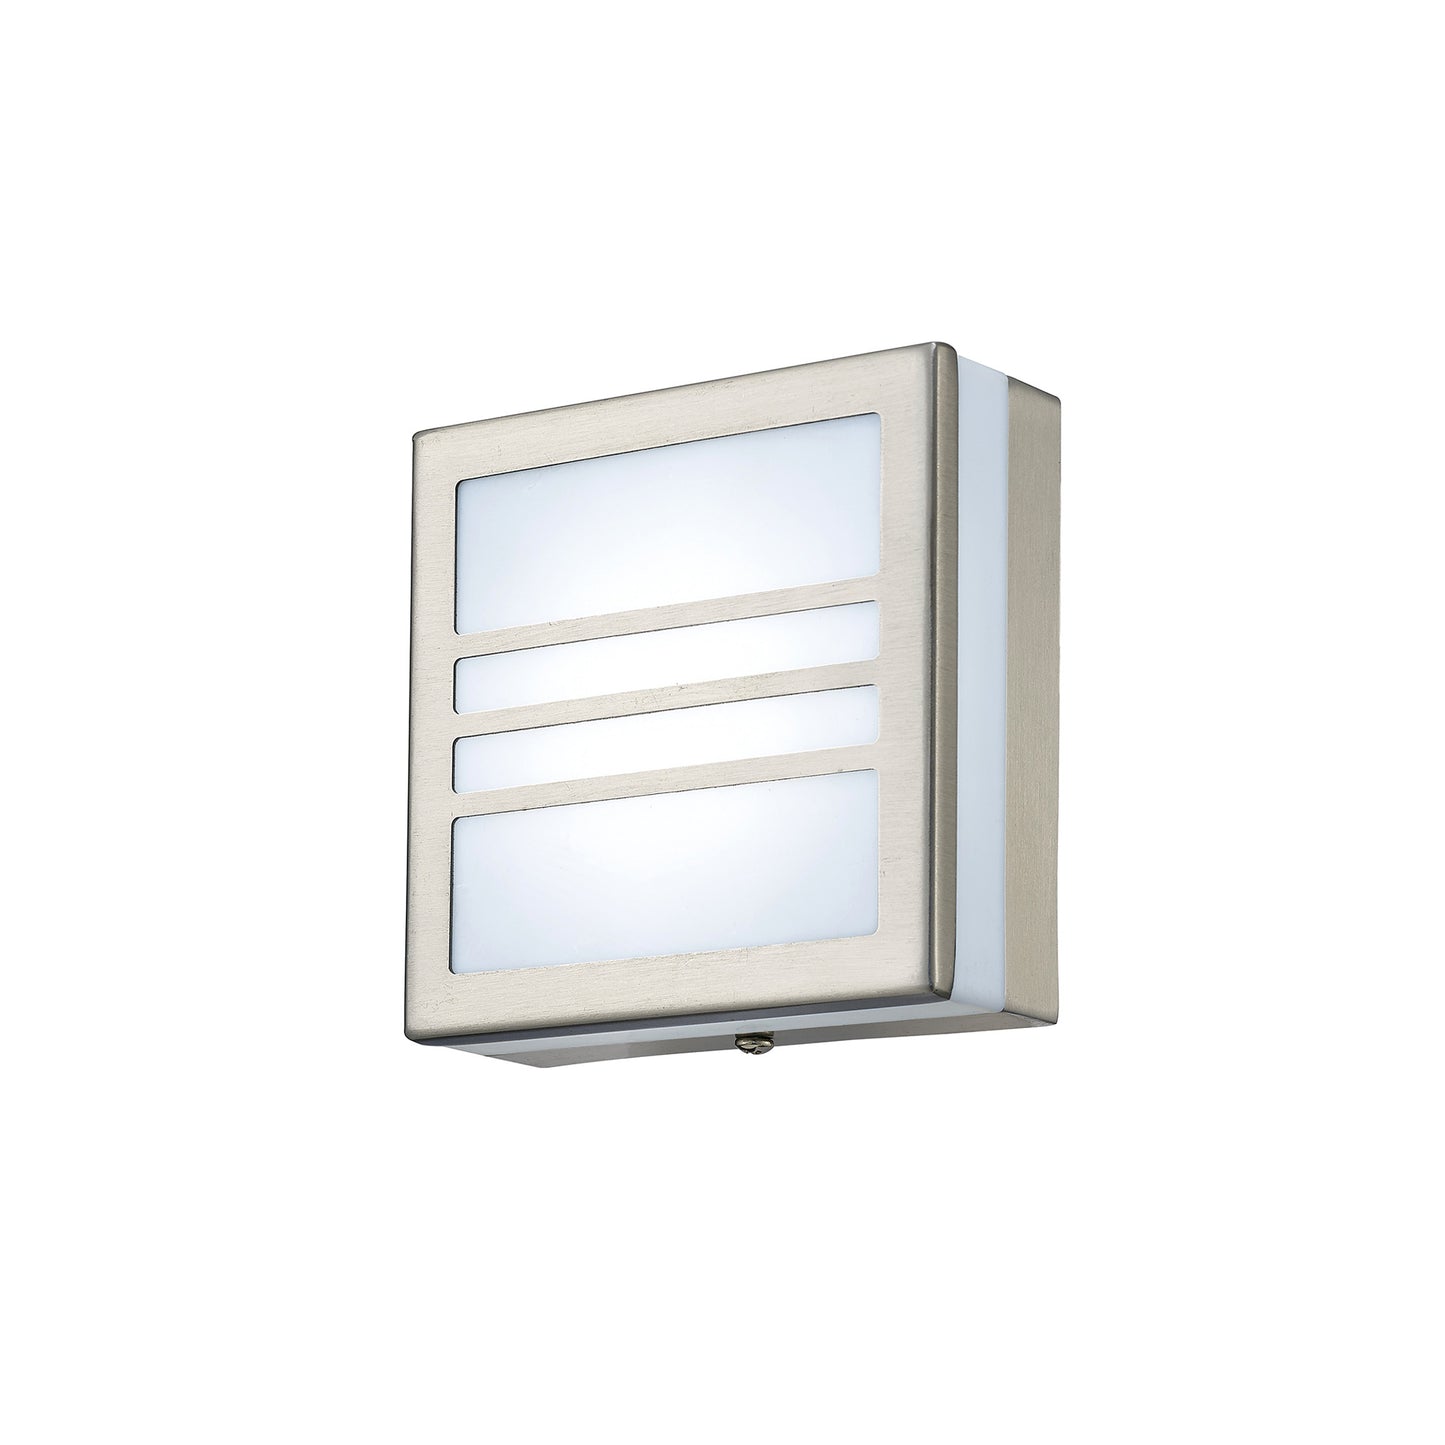 Aldo IP44 Flush Ceiling/Wall Lamp